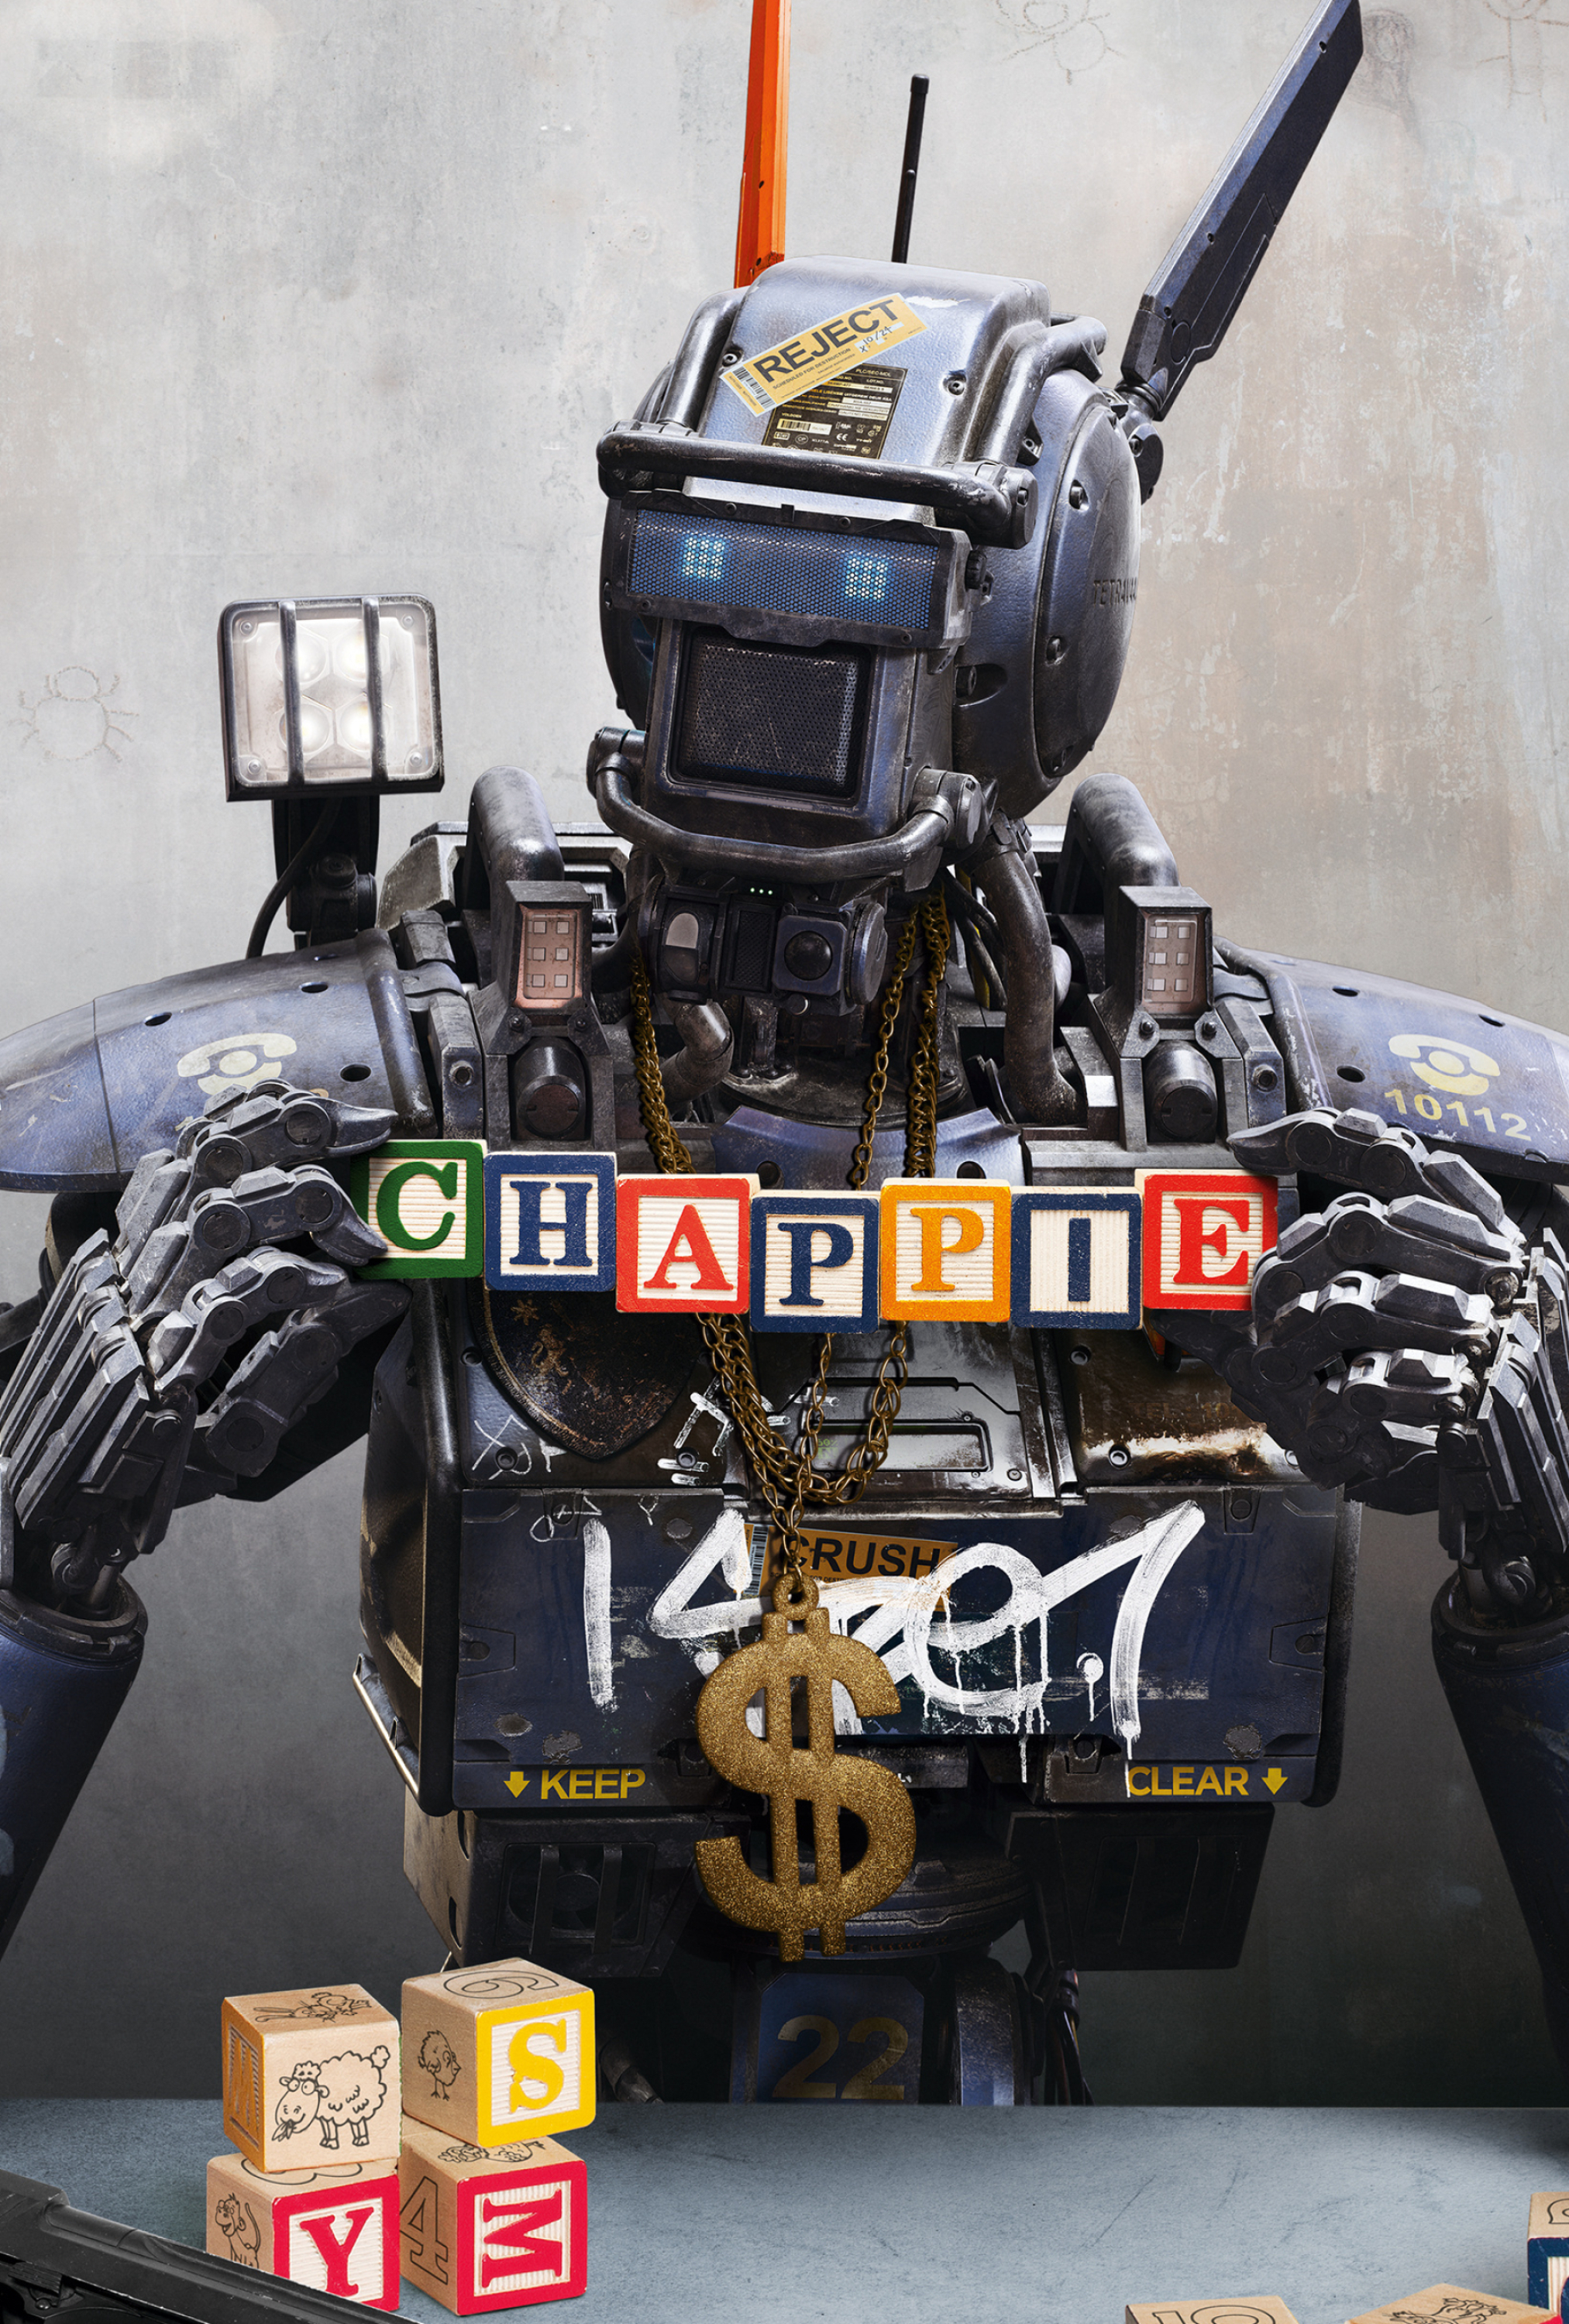 Chappie: Blomkamp's third feature-length film as director. 2030x3000 HD Wallpaper.